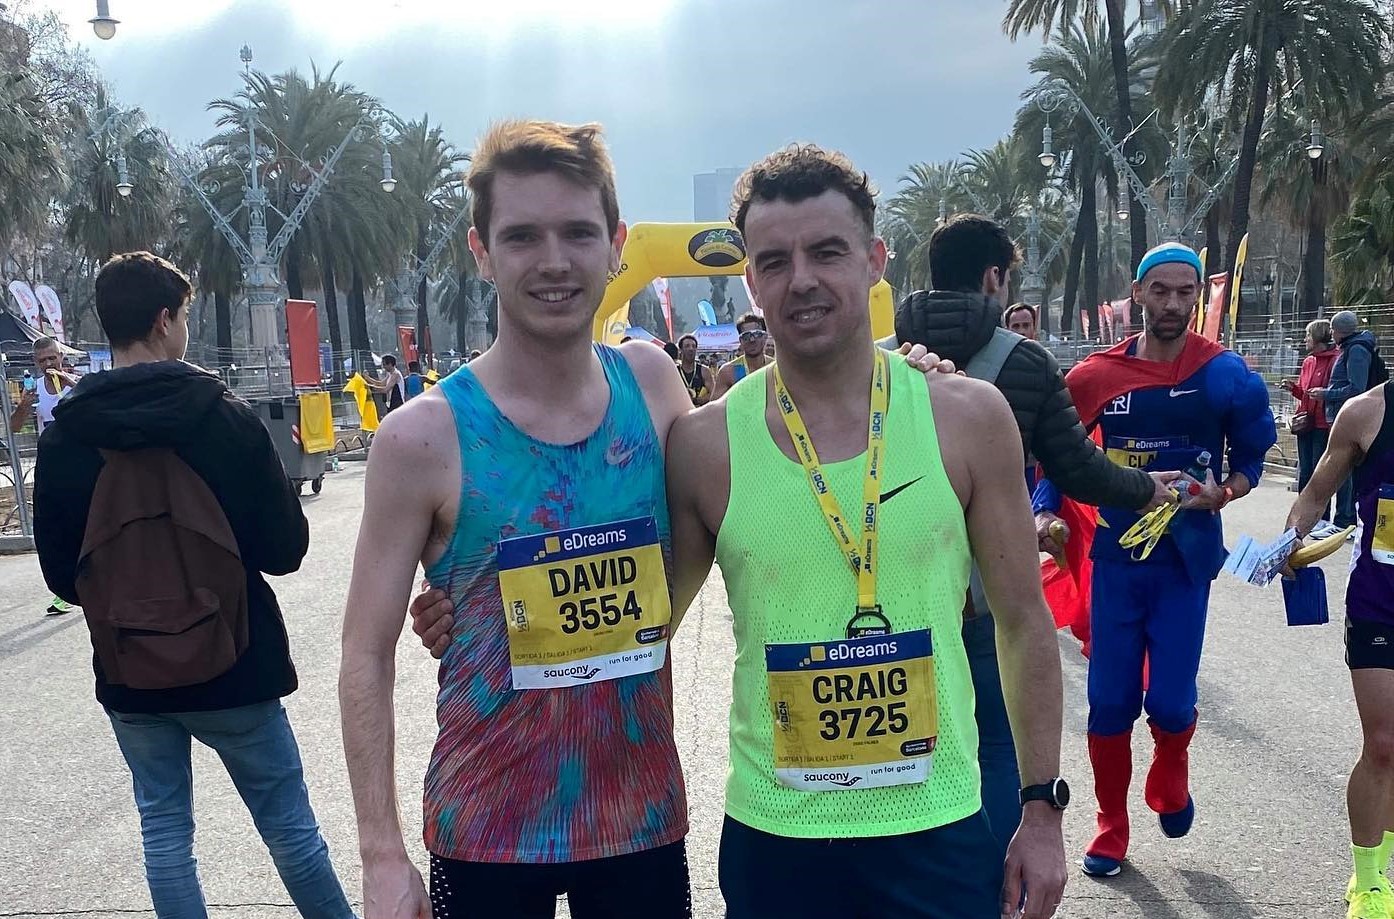 Dave Long and Craig Palmer hit the Barcelona Half Marathon